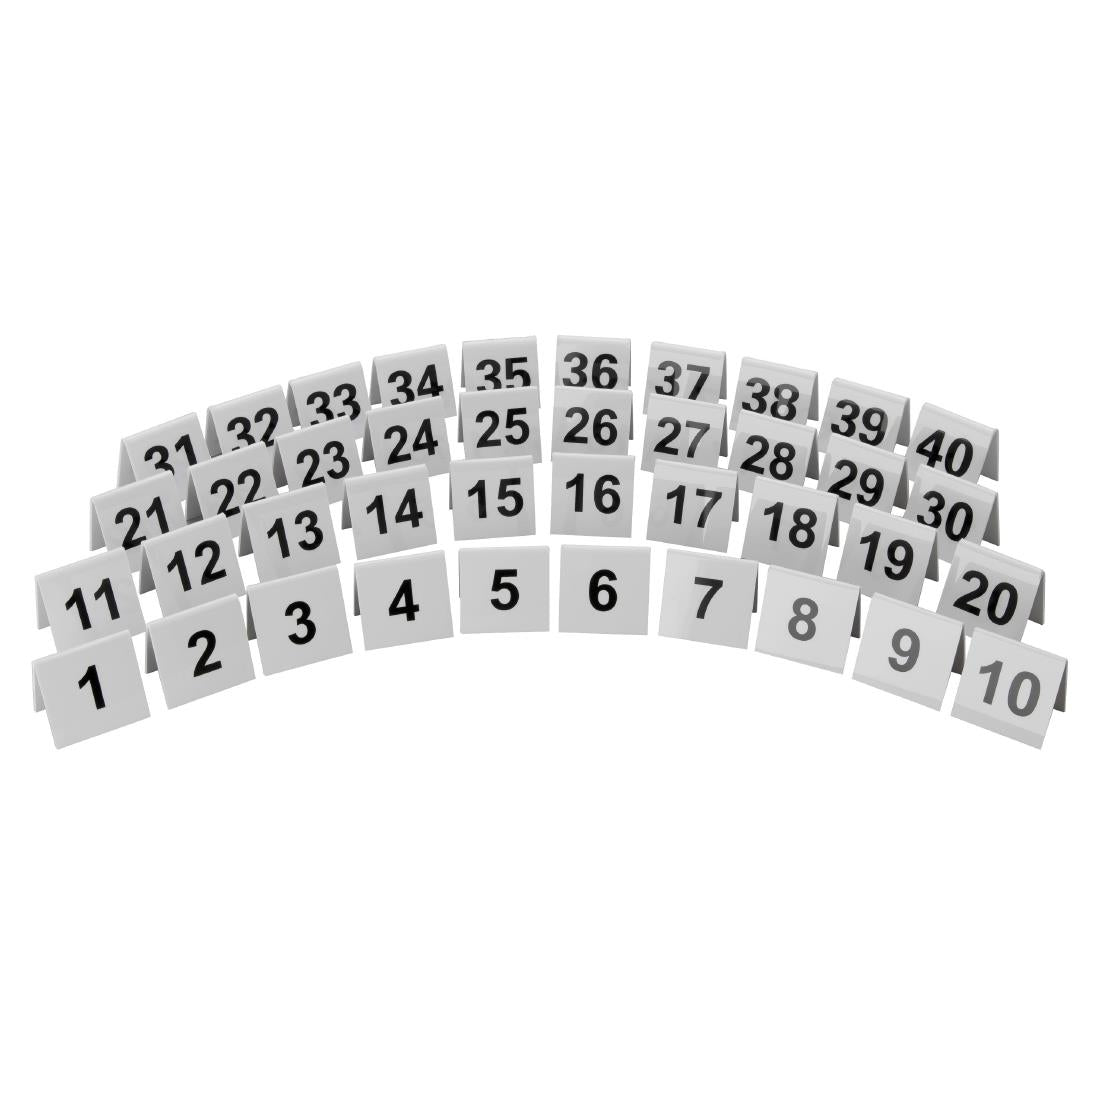 L984 Plastic Table Numbers 31-40